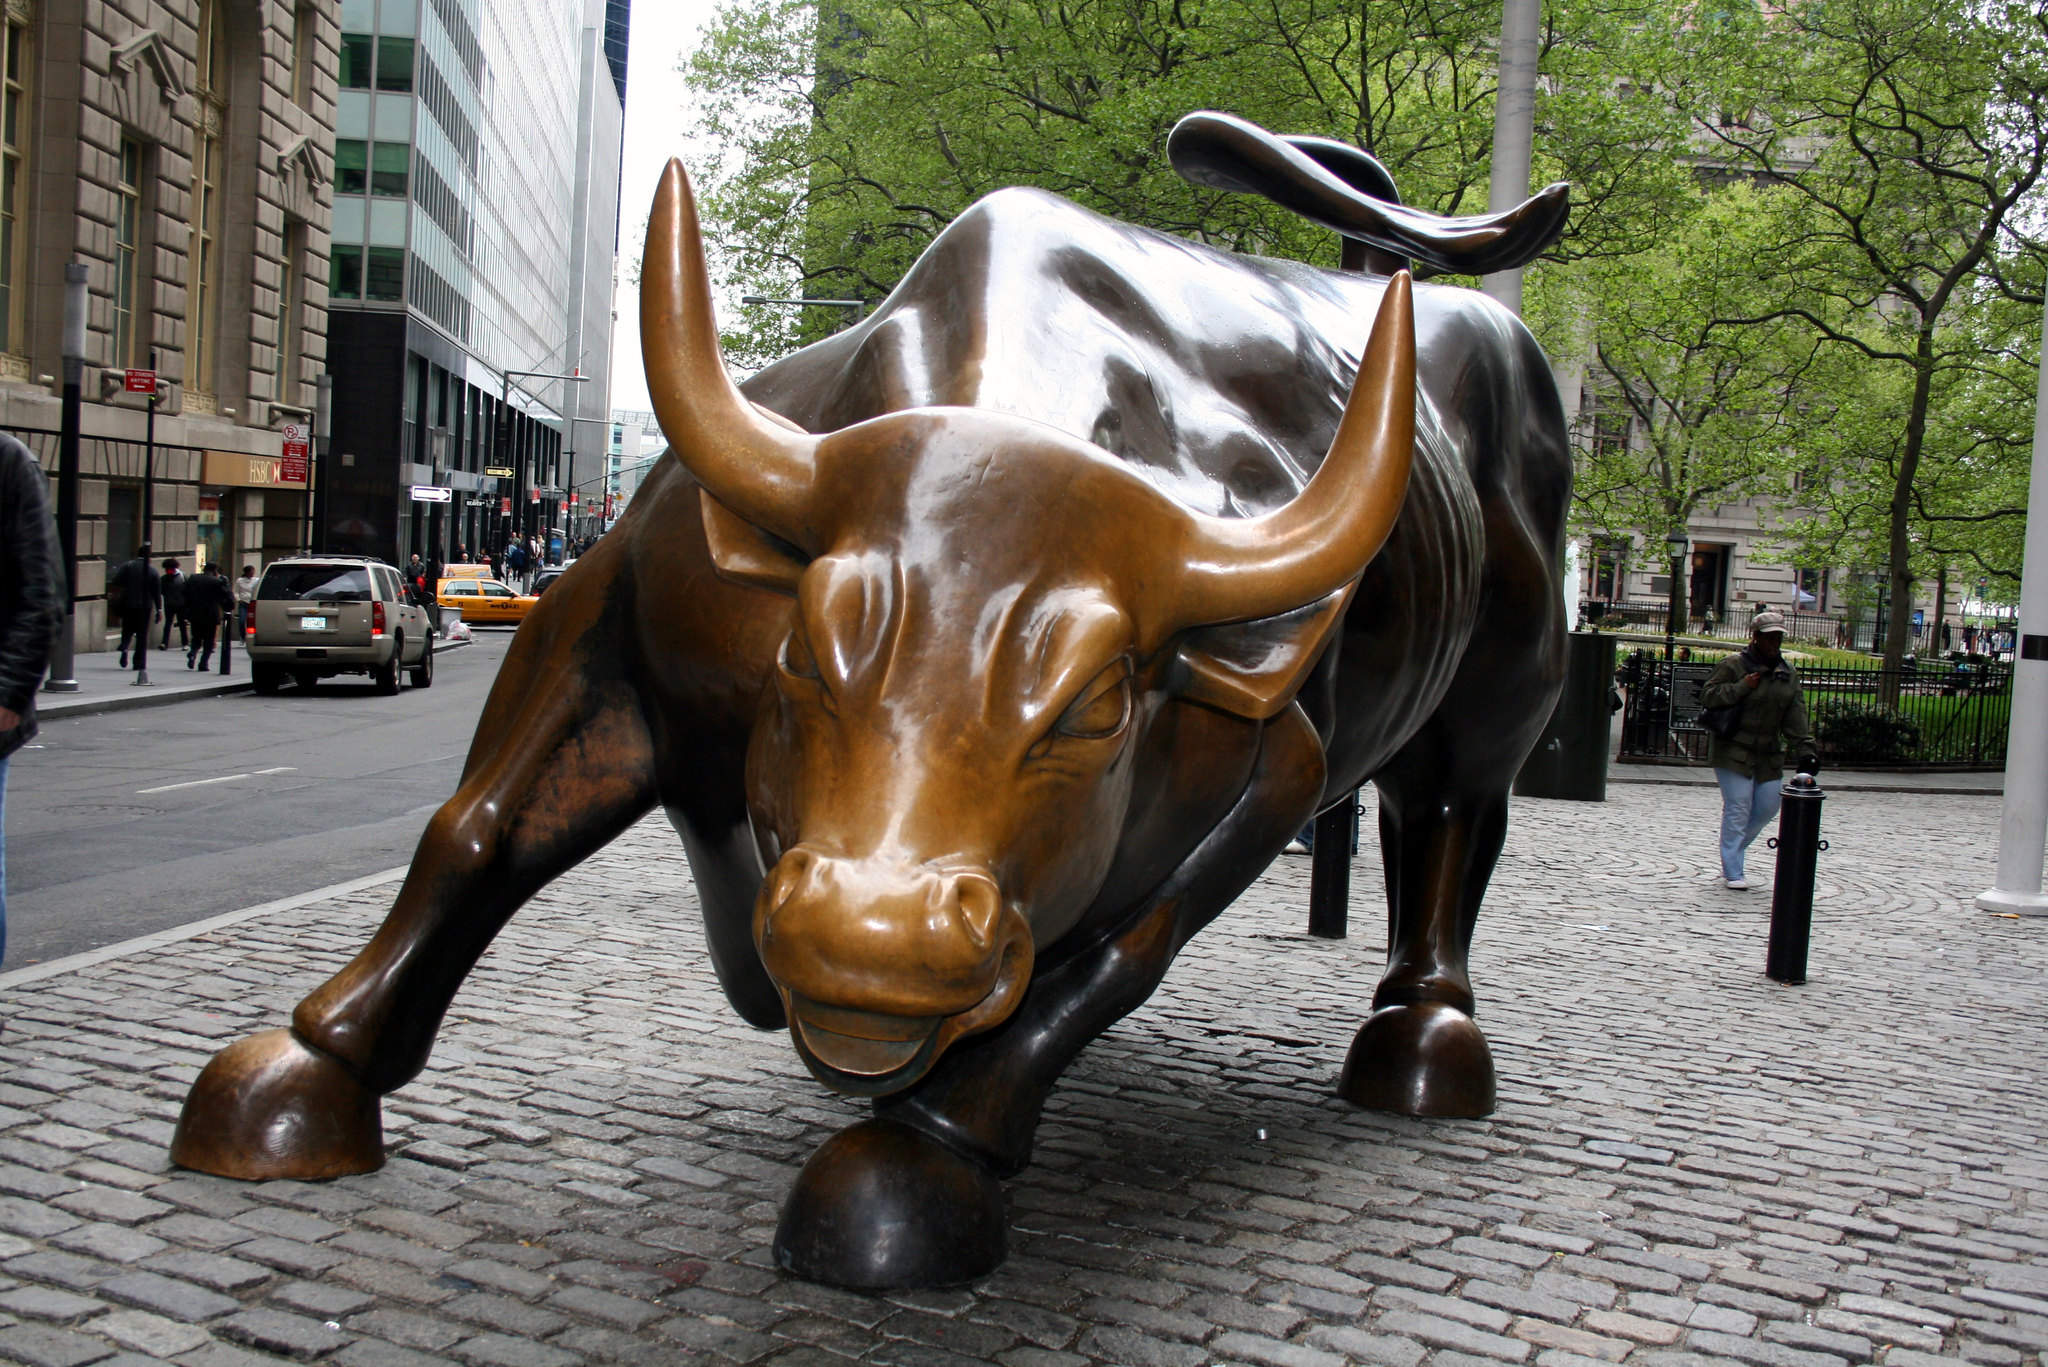 Wallstreet Bull Near NYSE Stock Exchange